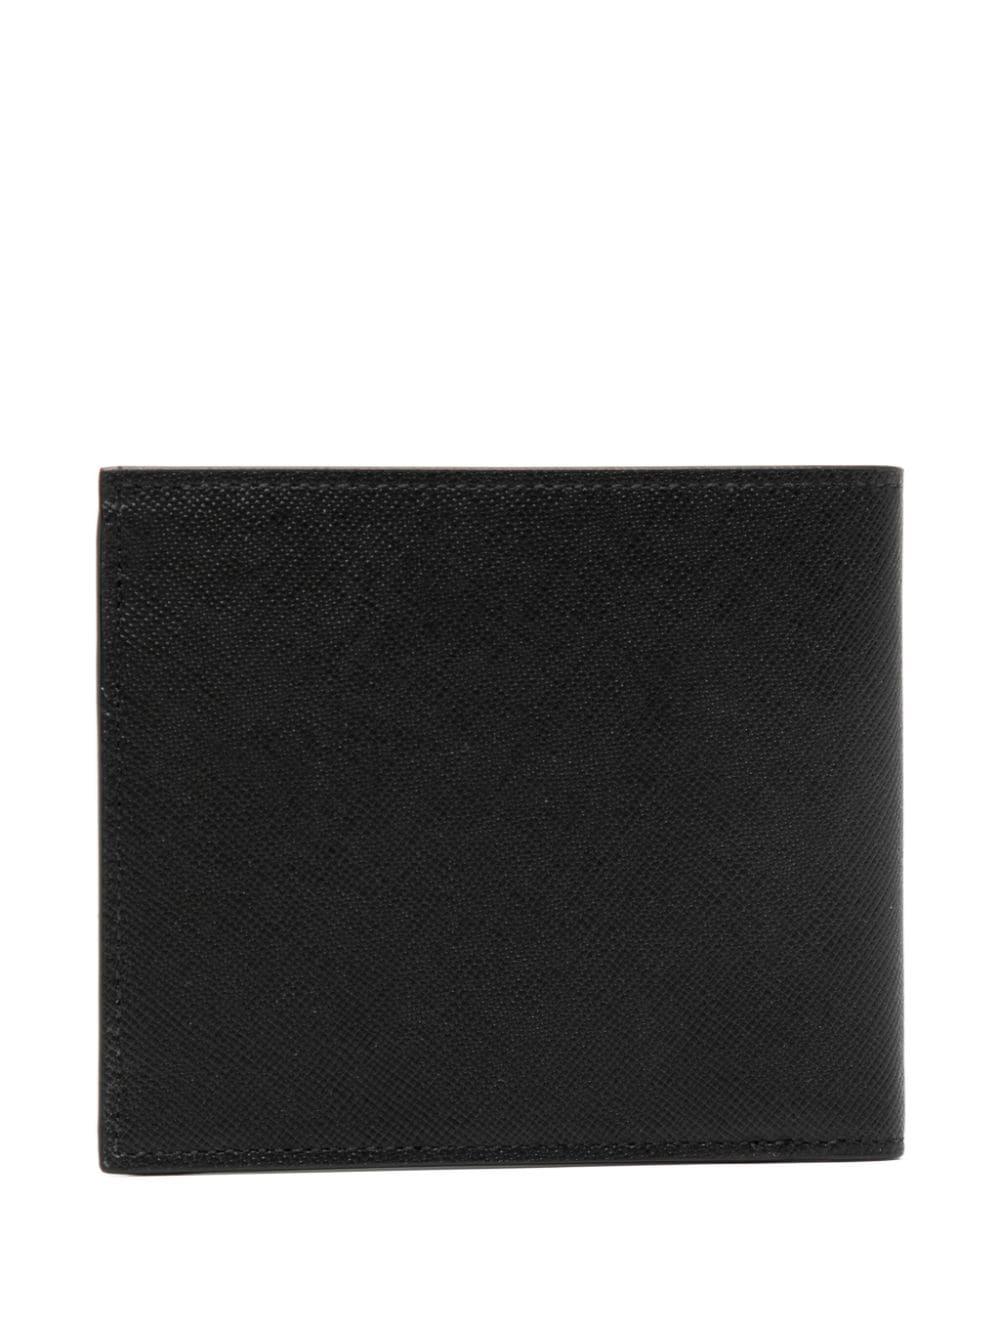 Paul Smith Mini Blur leather wallet - Black